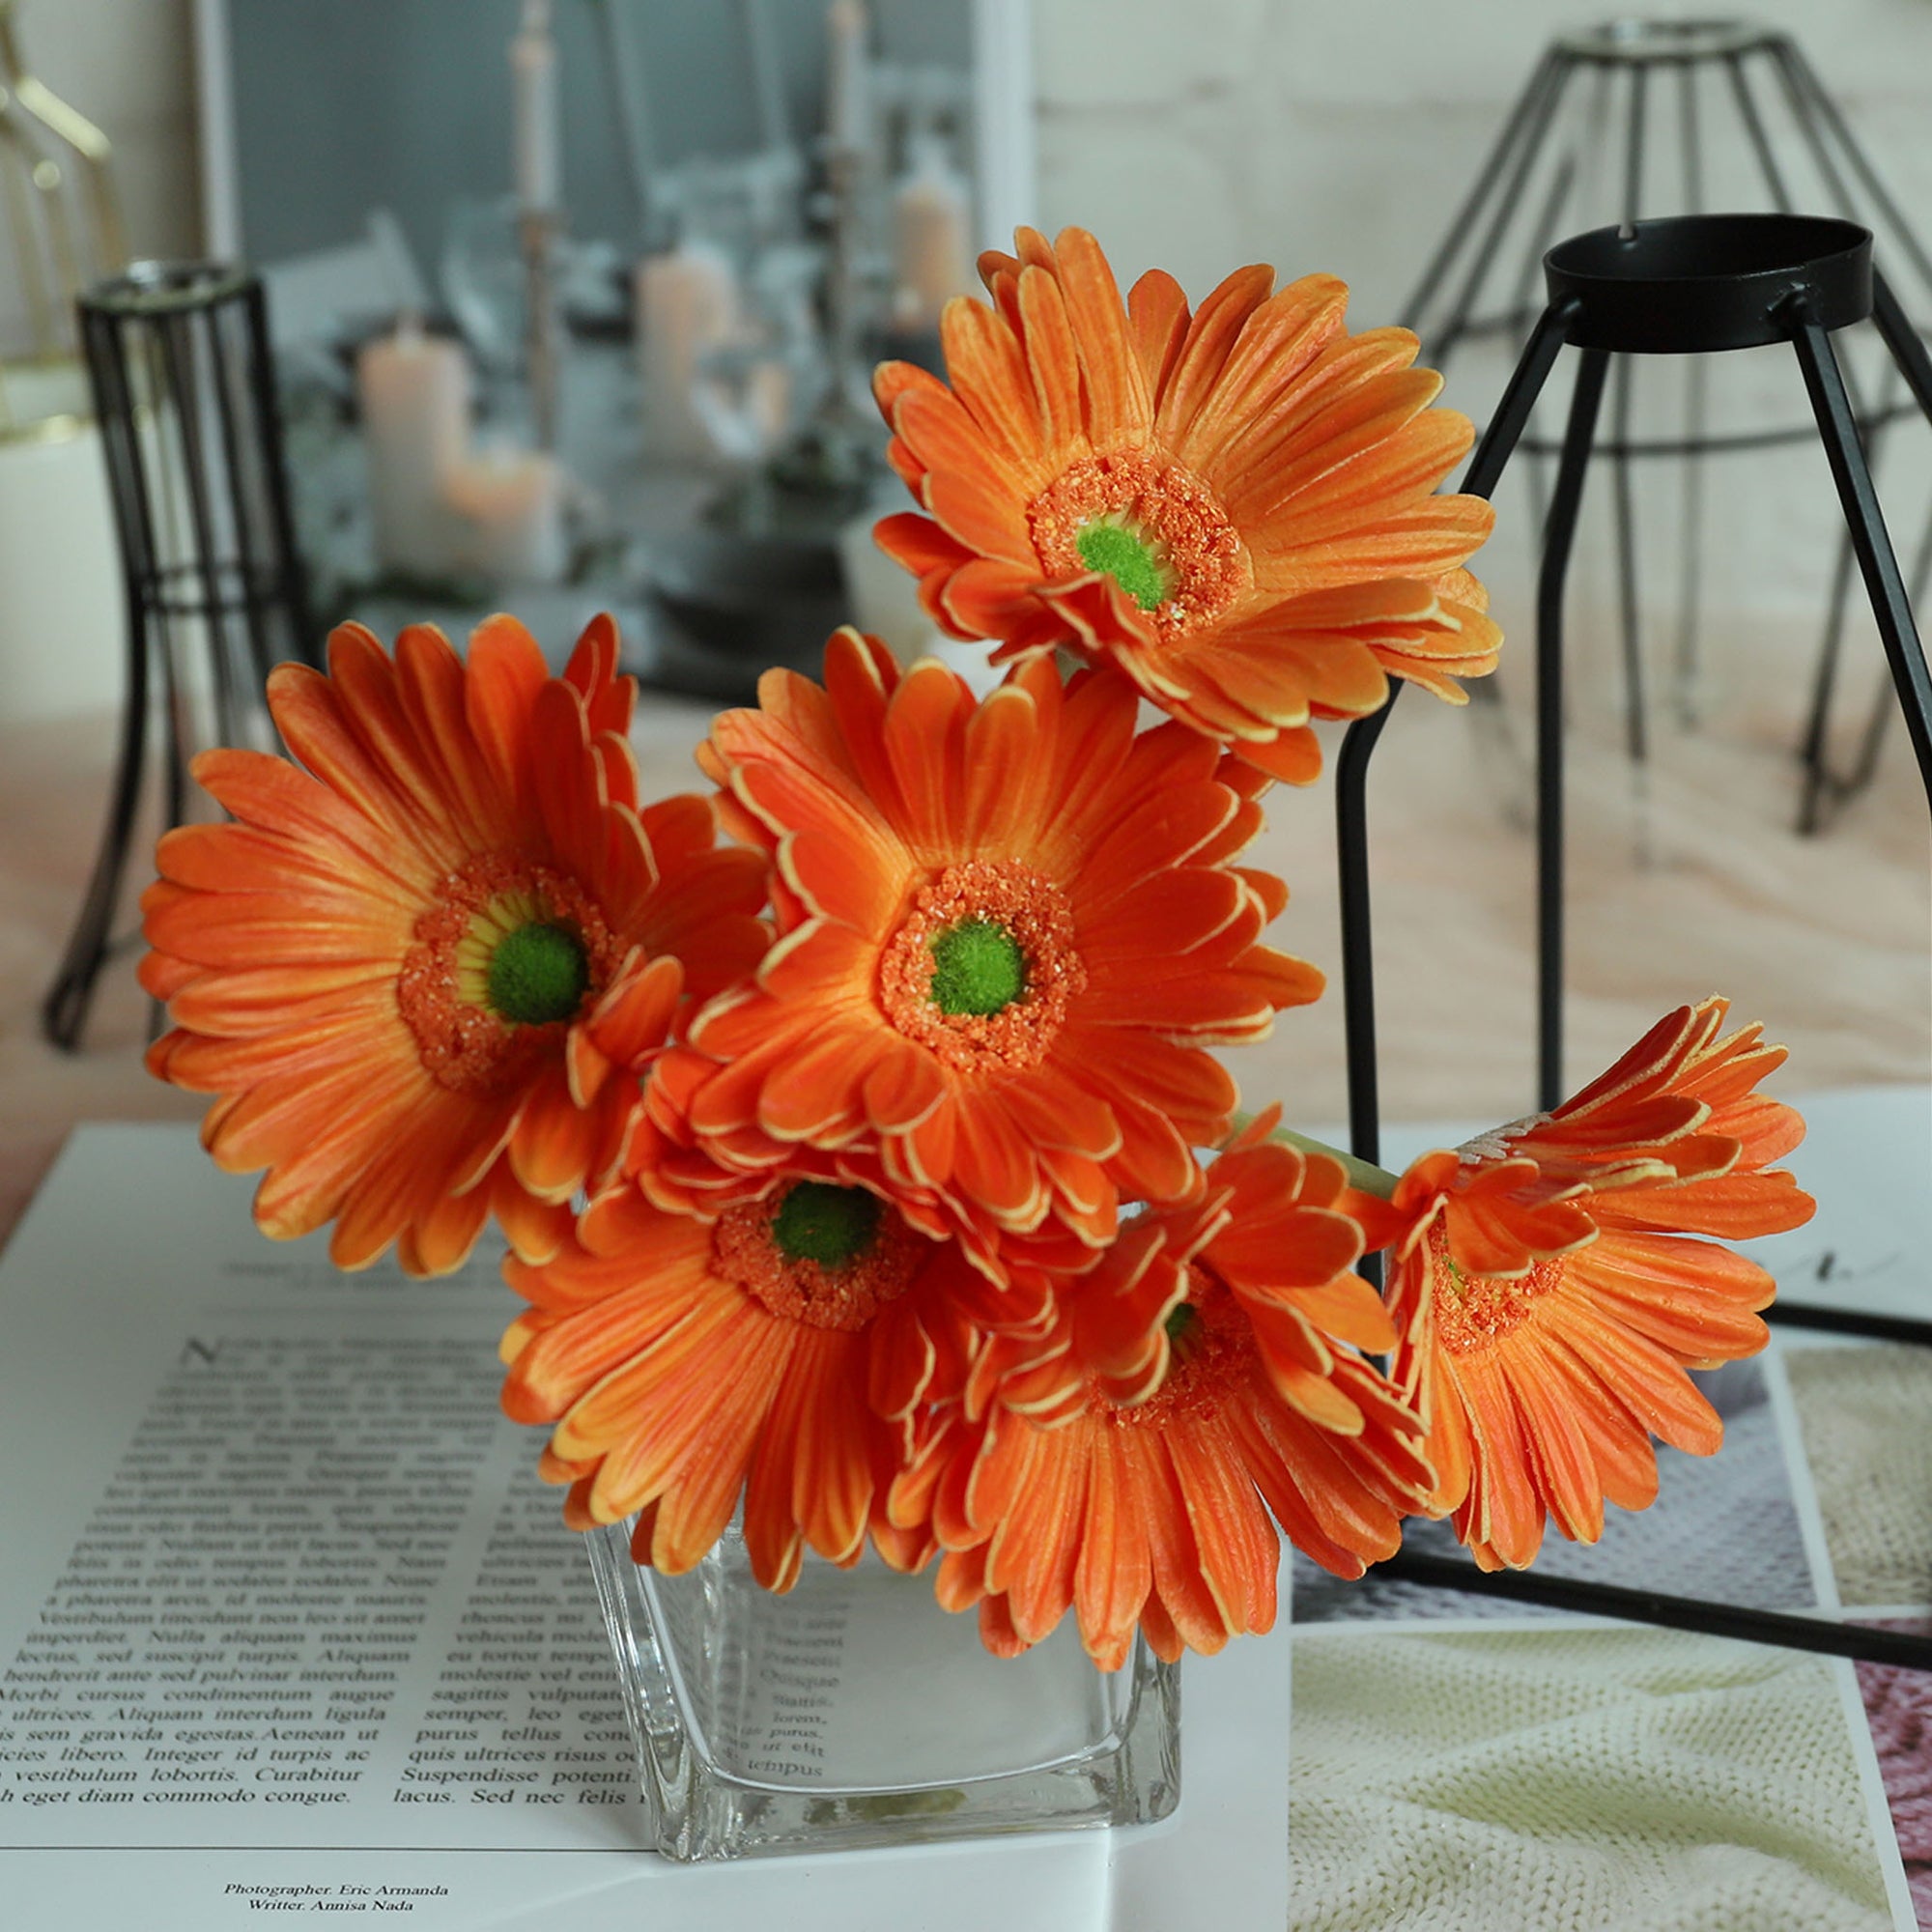 Realistic Artificial Gerbera Daisy Flower Bouquet